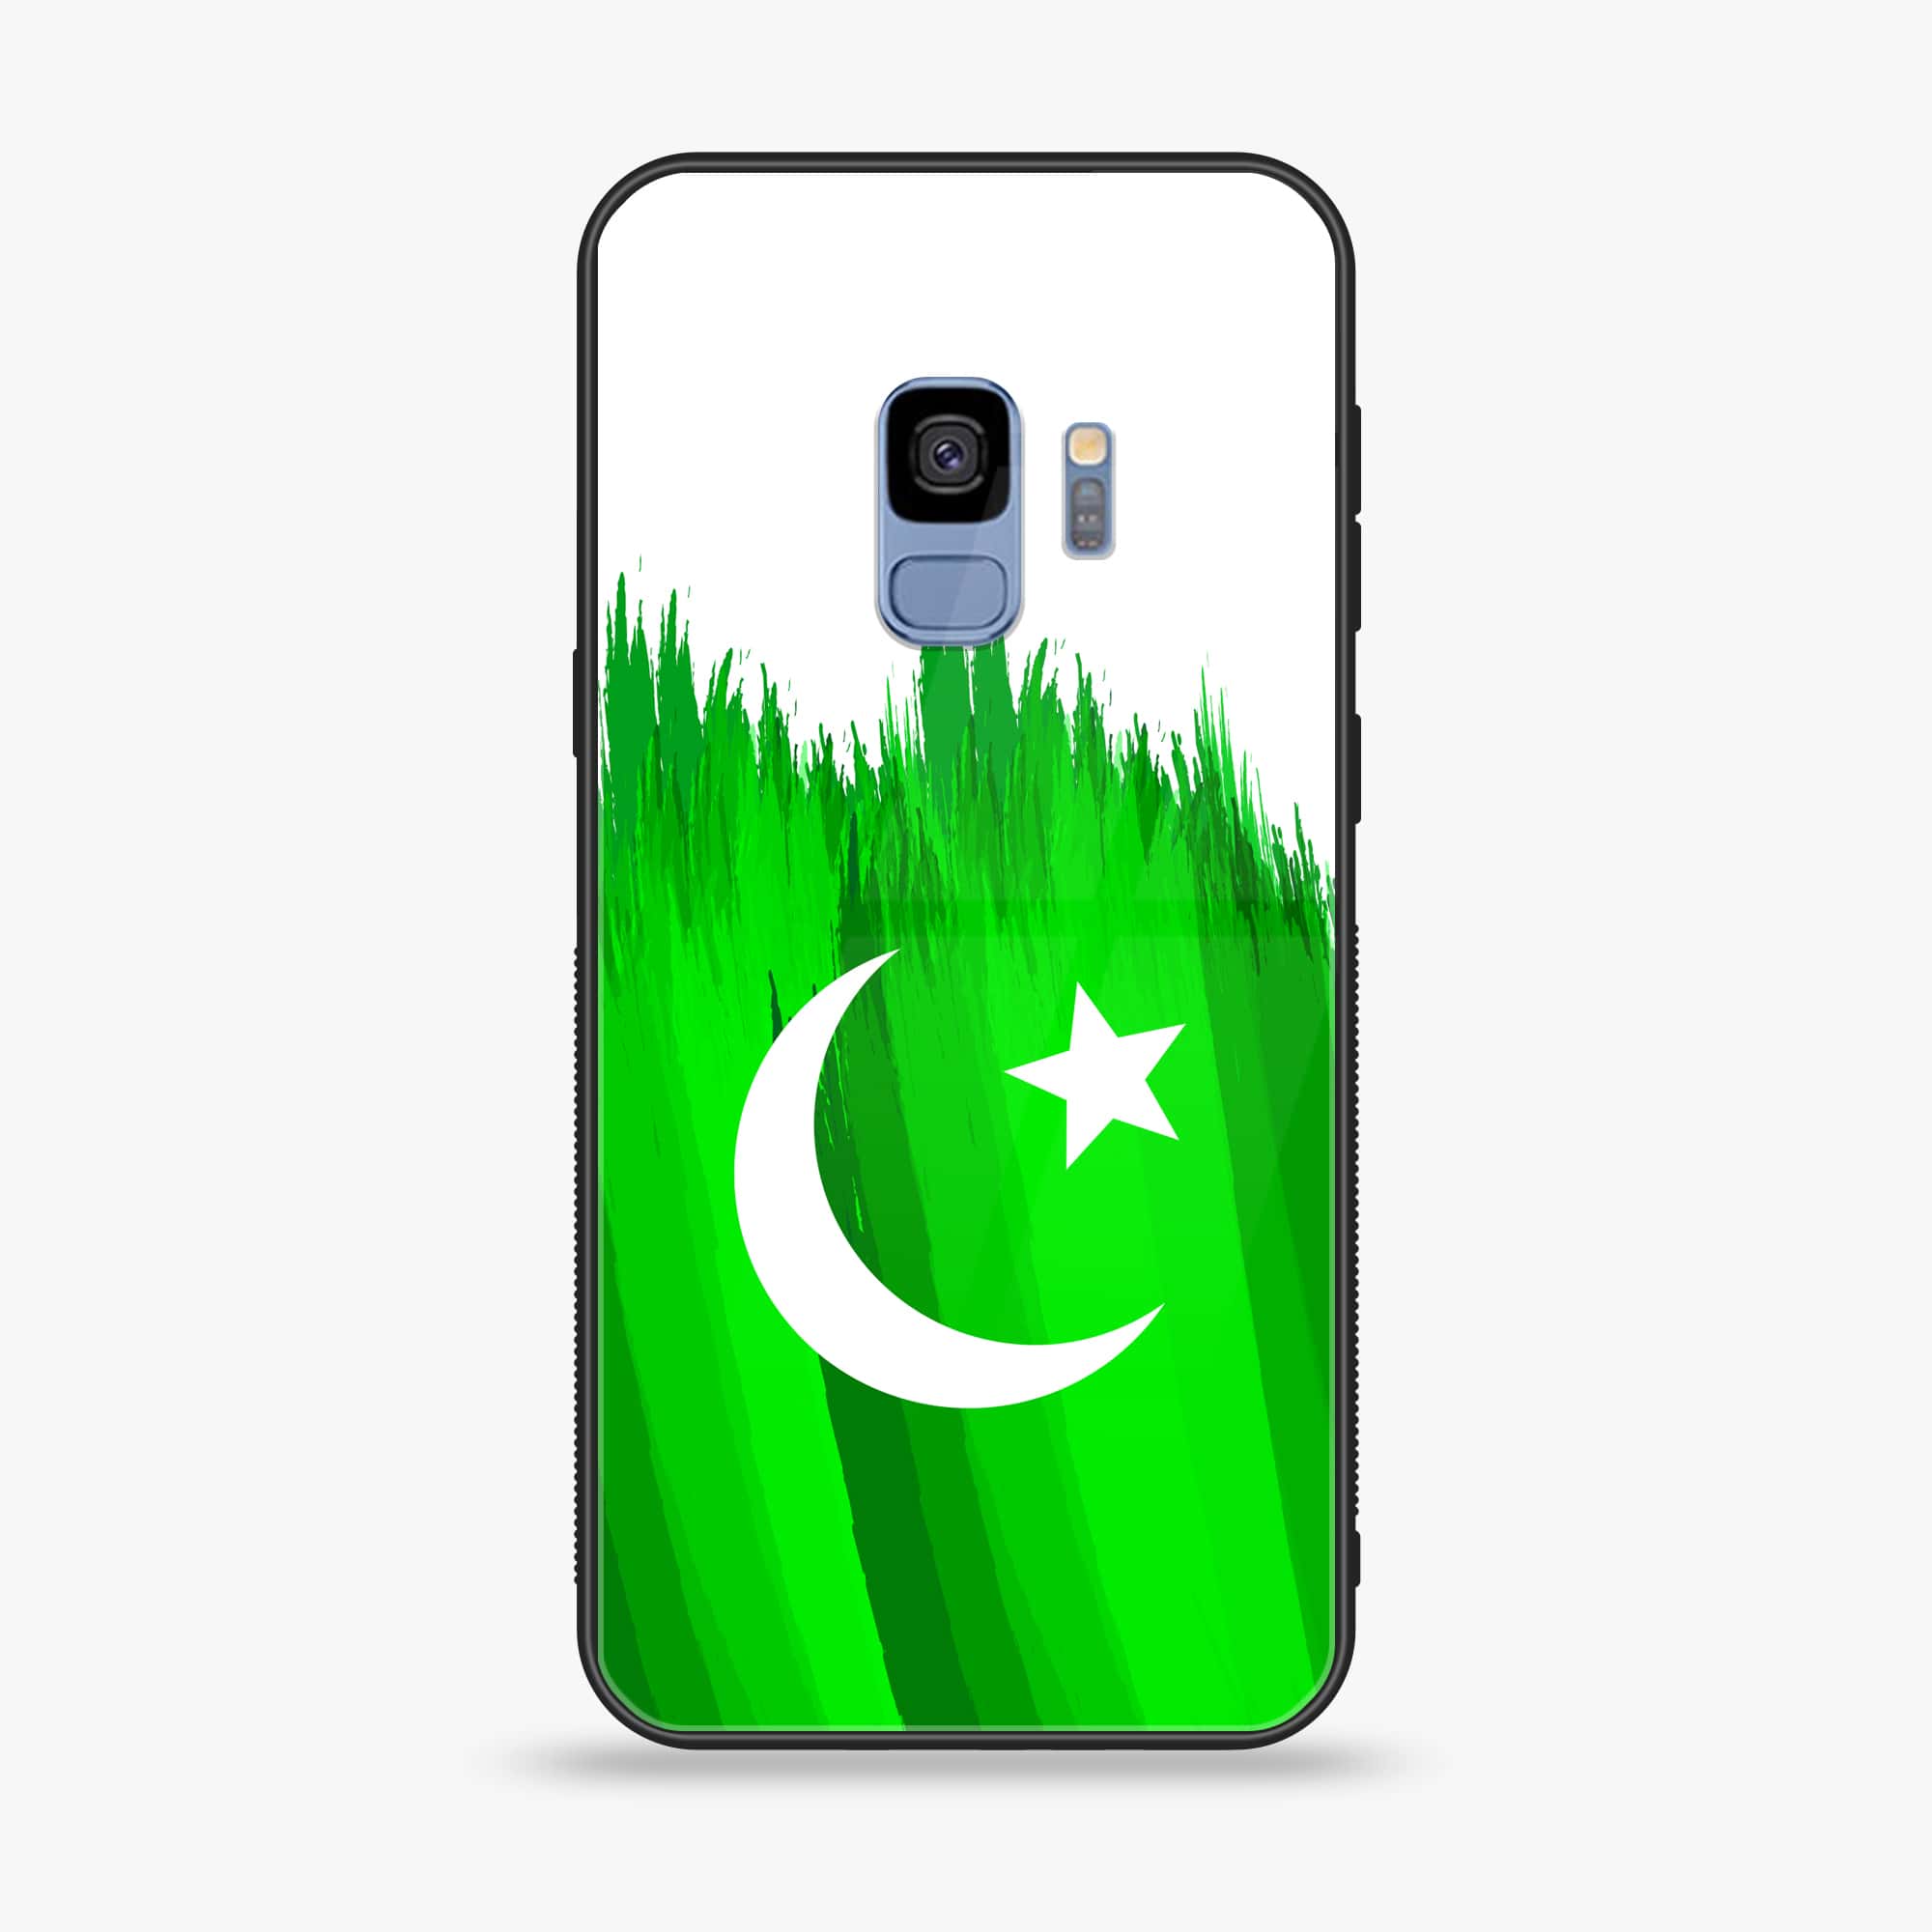 Galaxy S9 - Pakistani Flag Series - Premium Printed Glass soft Bumper shock Proof Case